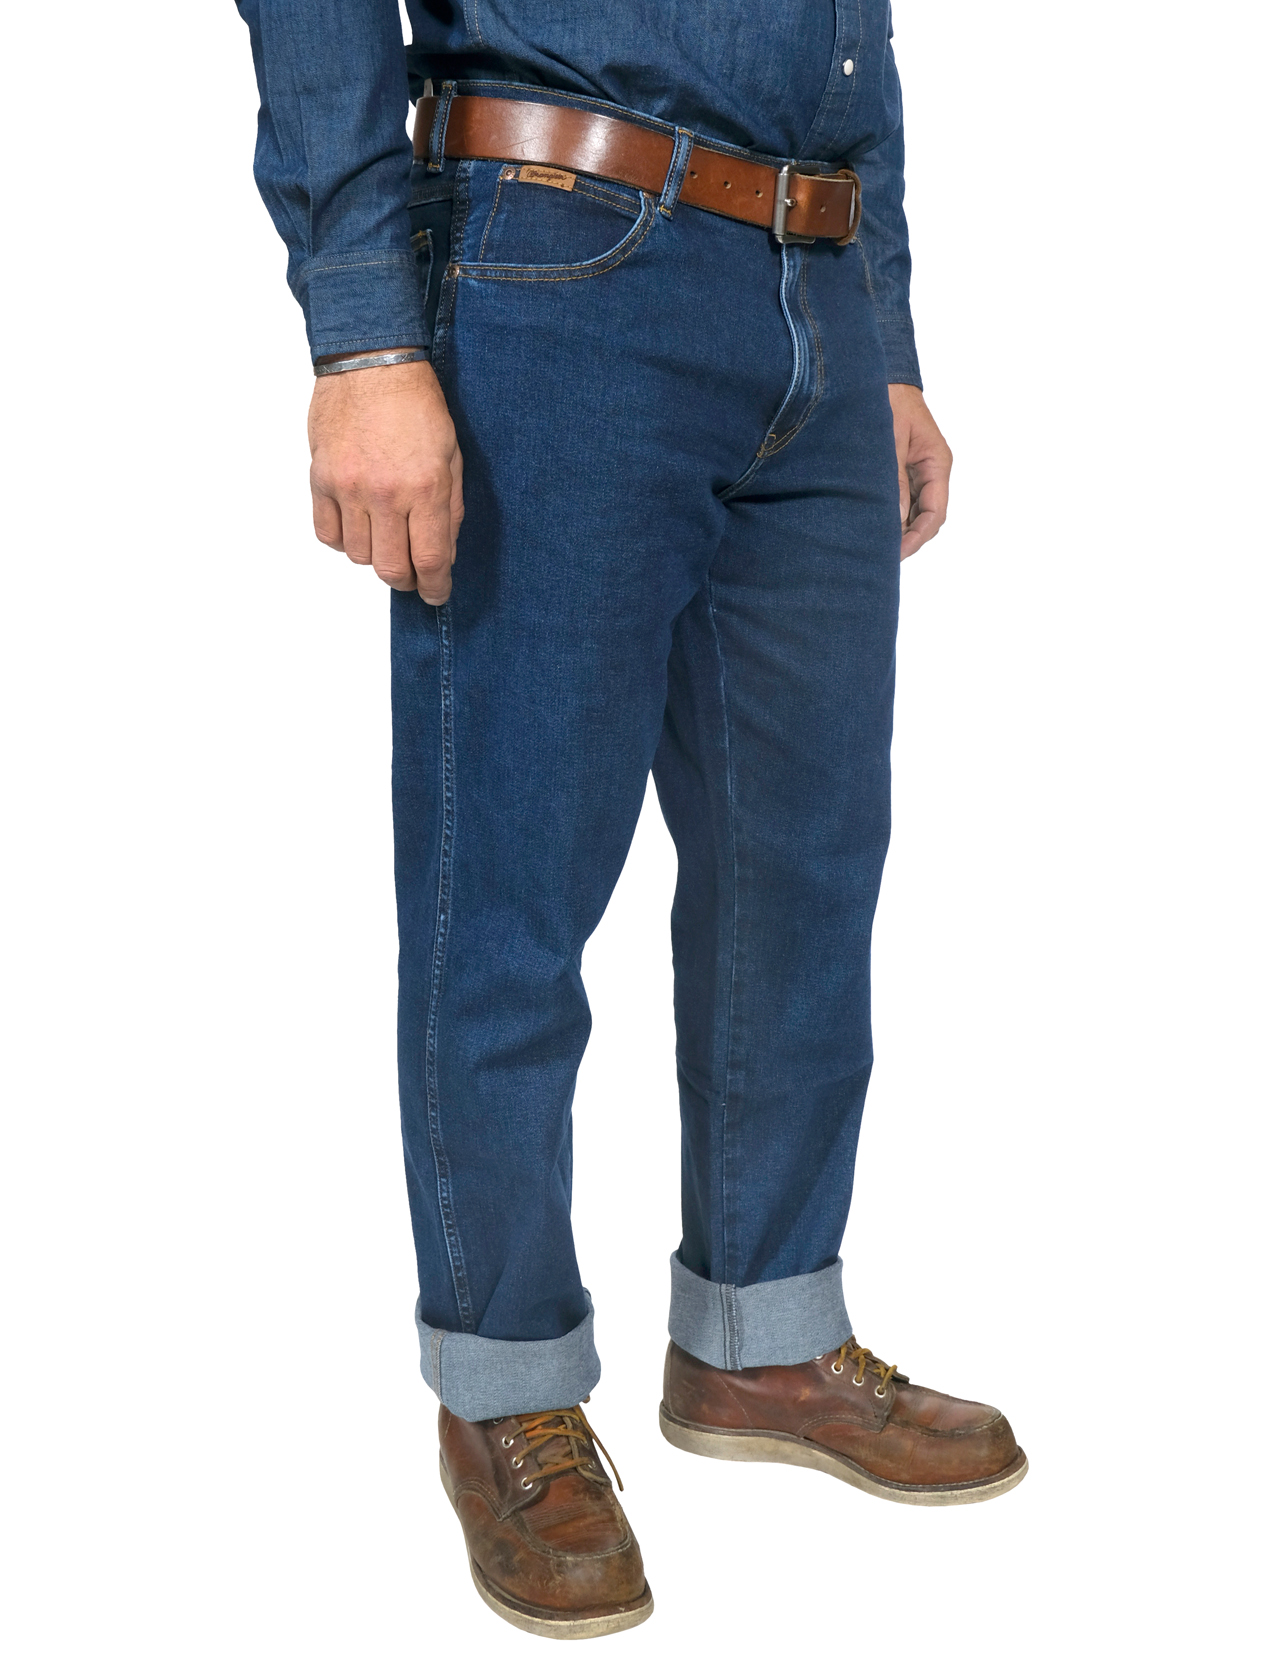 Wrangler - Texas Medium Stretch Jeans - Darkstone